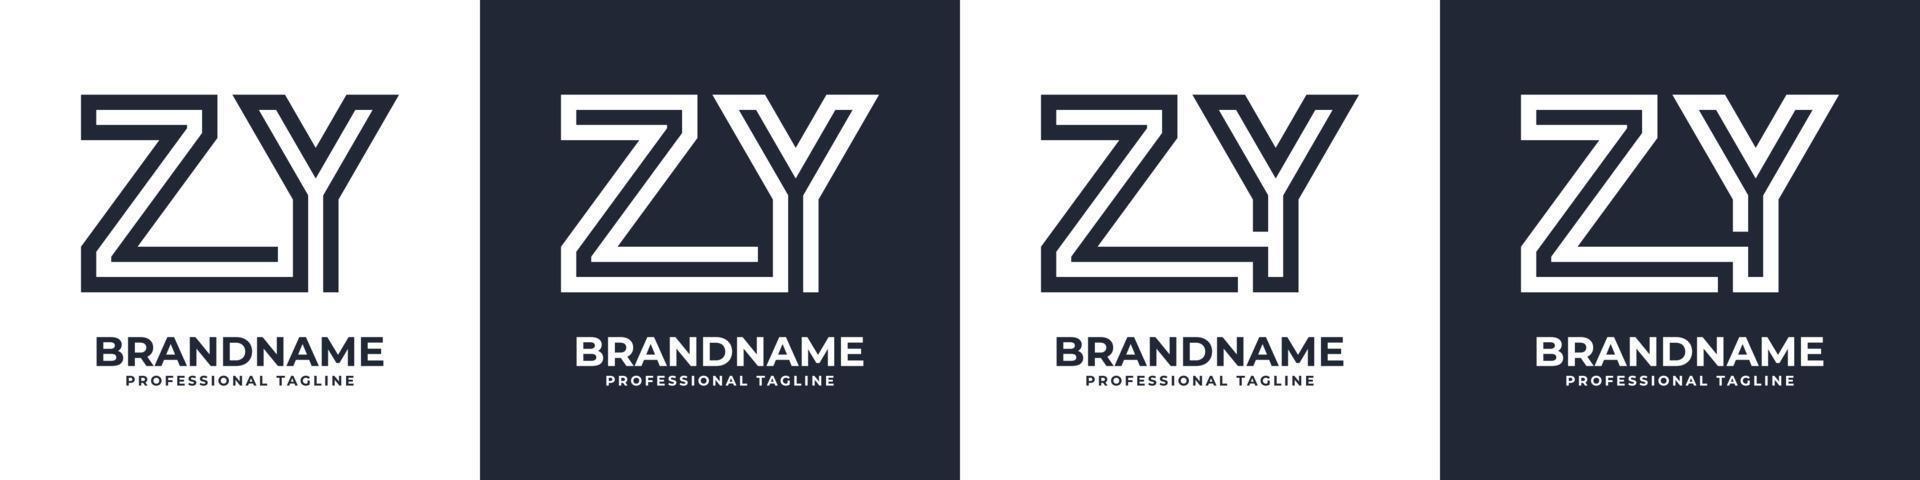 sencillo zy monograma logo, adecuado para ninguna negocio con zy o yz inicial. vector